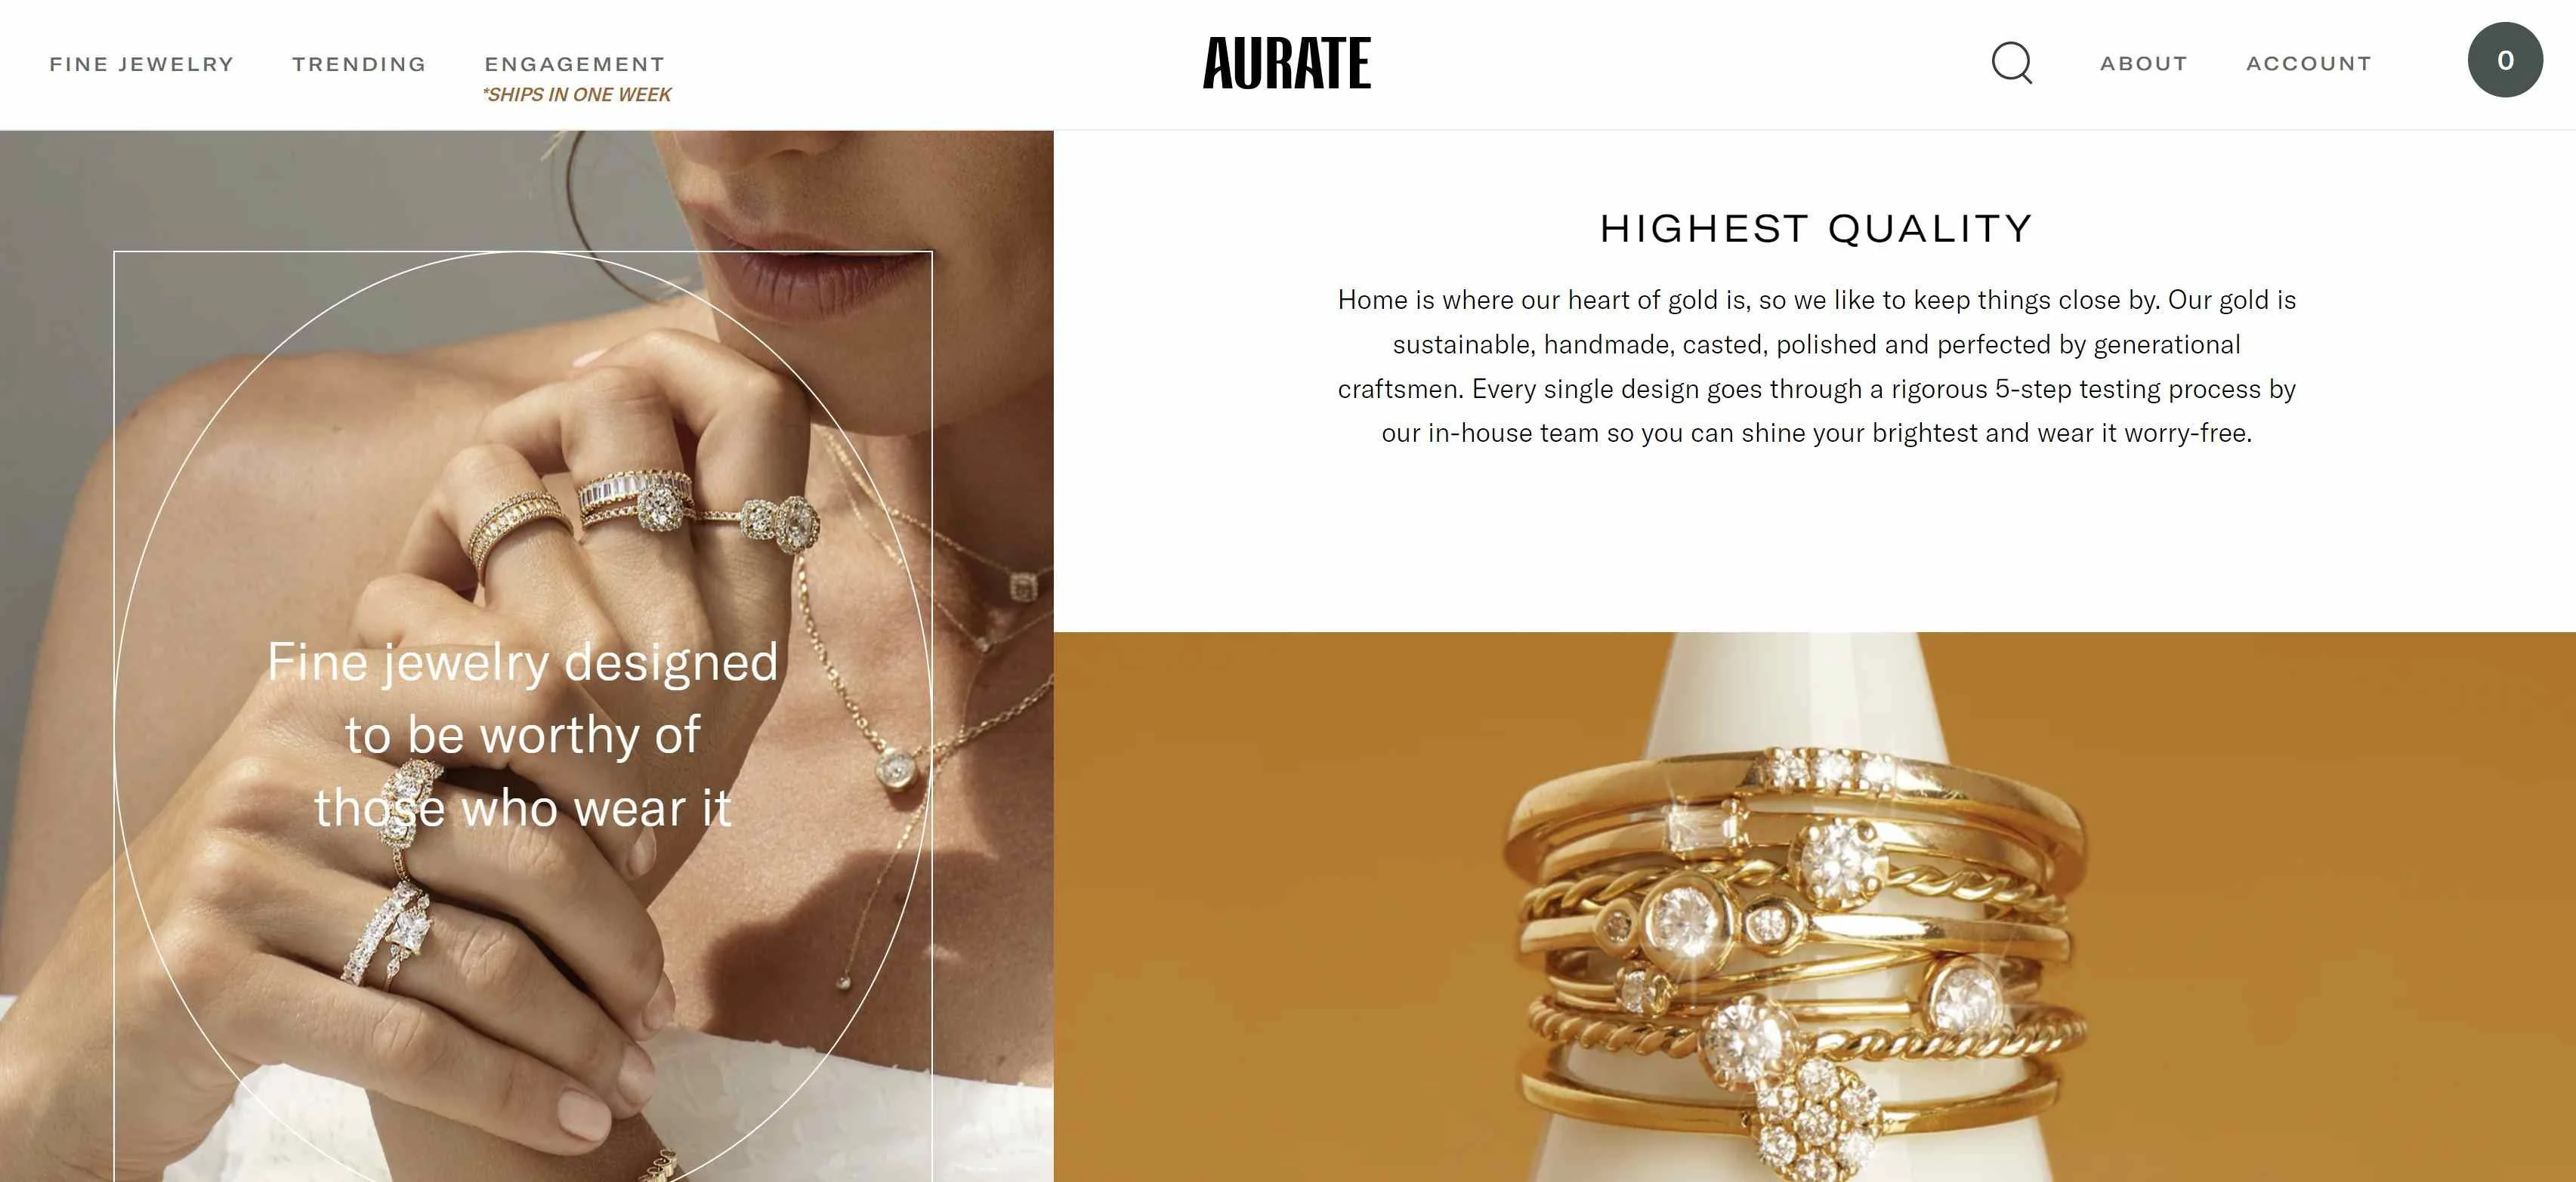 Aurate Review: Is this Fine Jewelry Designer Legit?